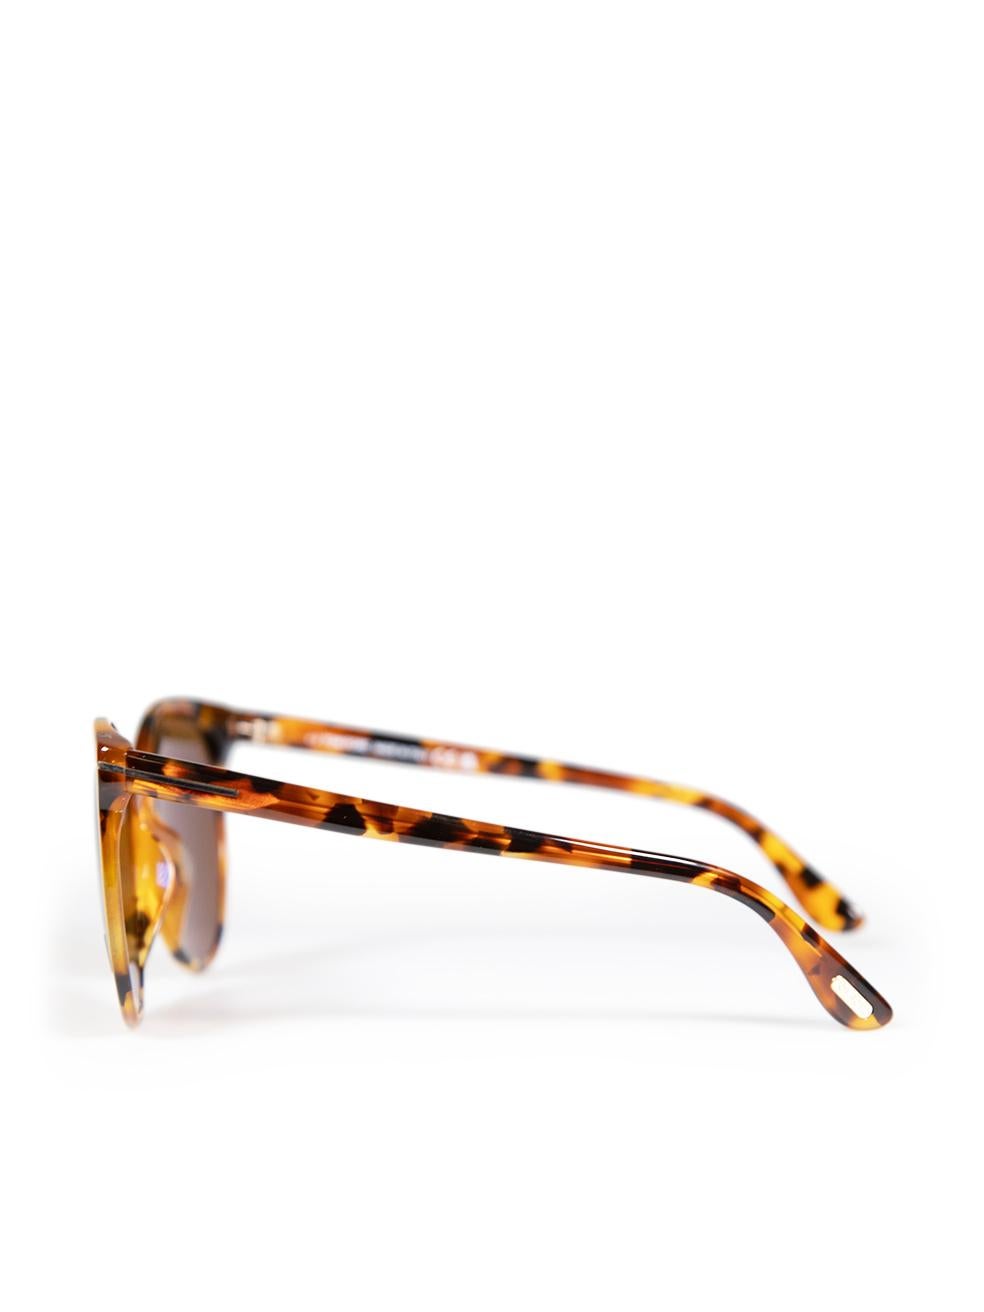 Tom Ford Coloured Havana Maxim Sunglasses For Sale 1